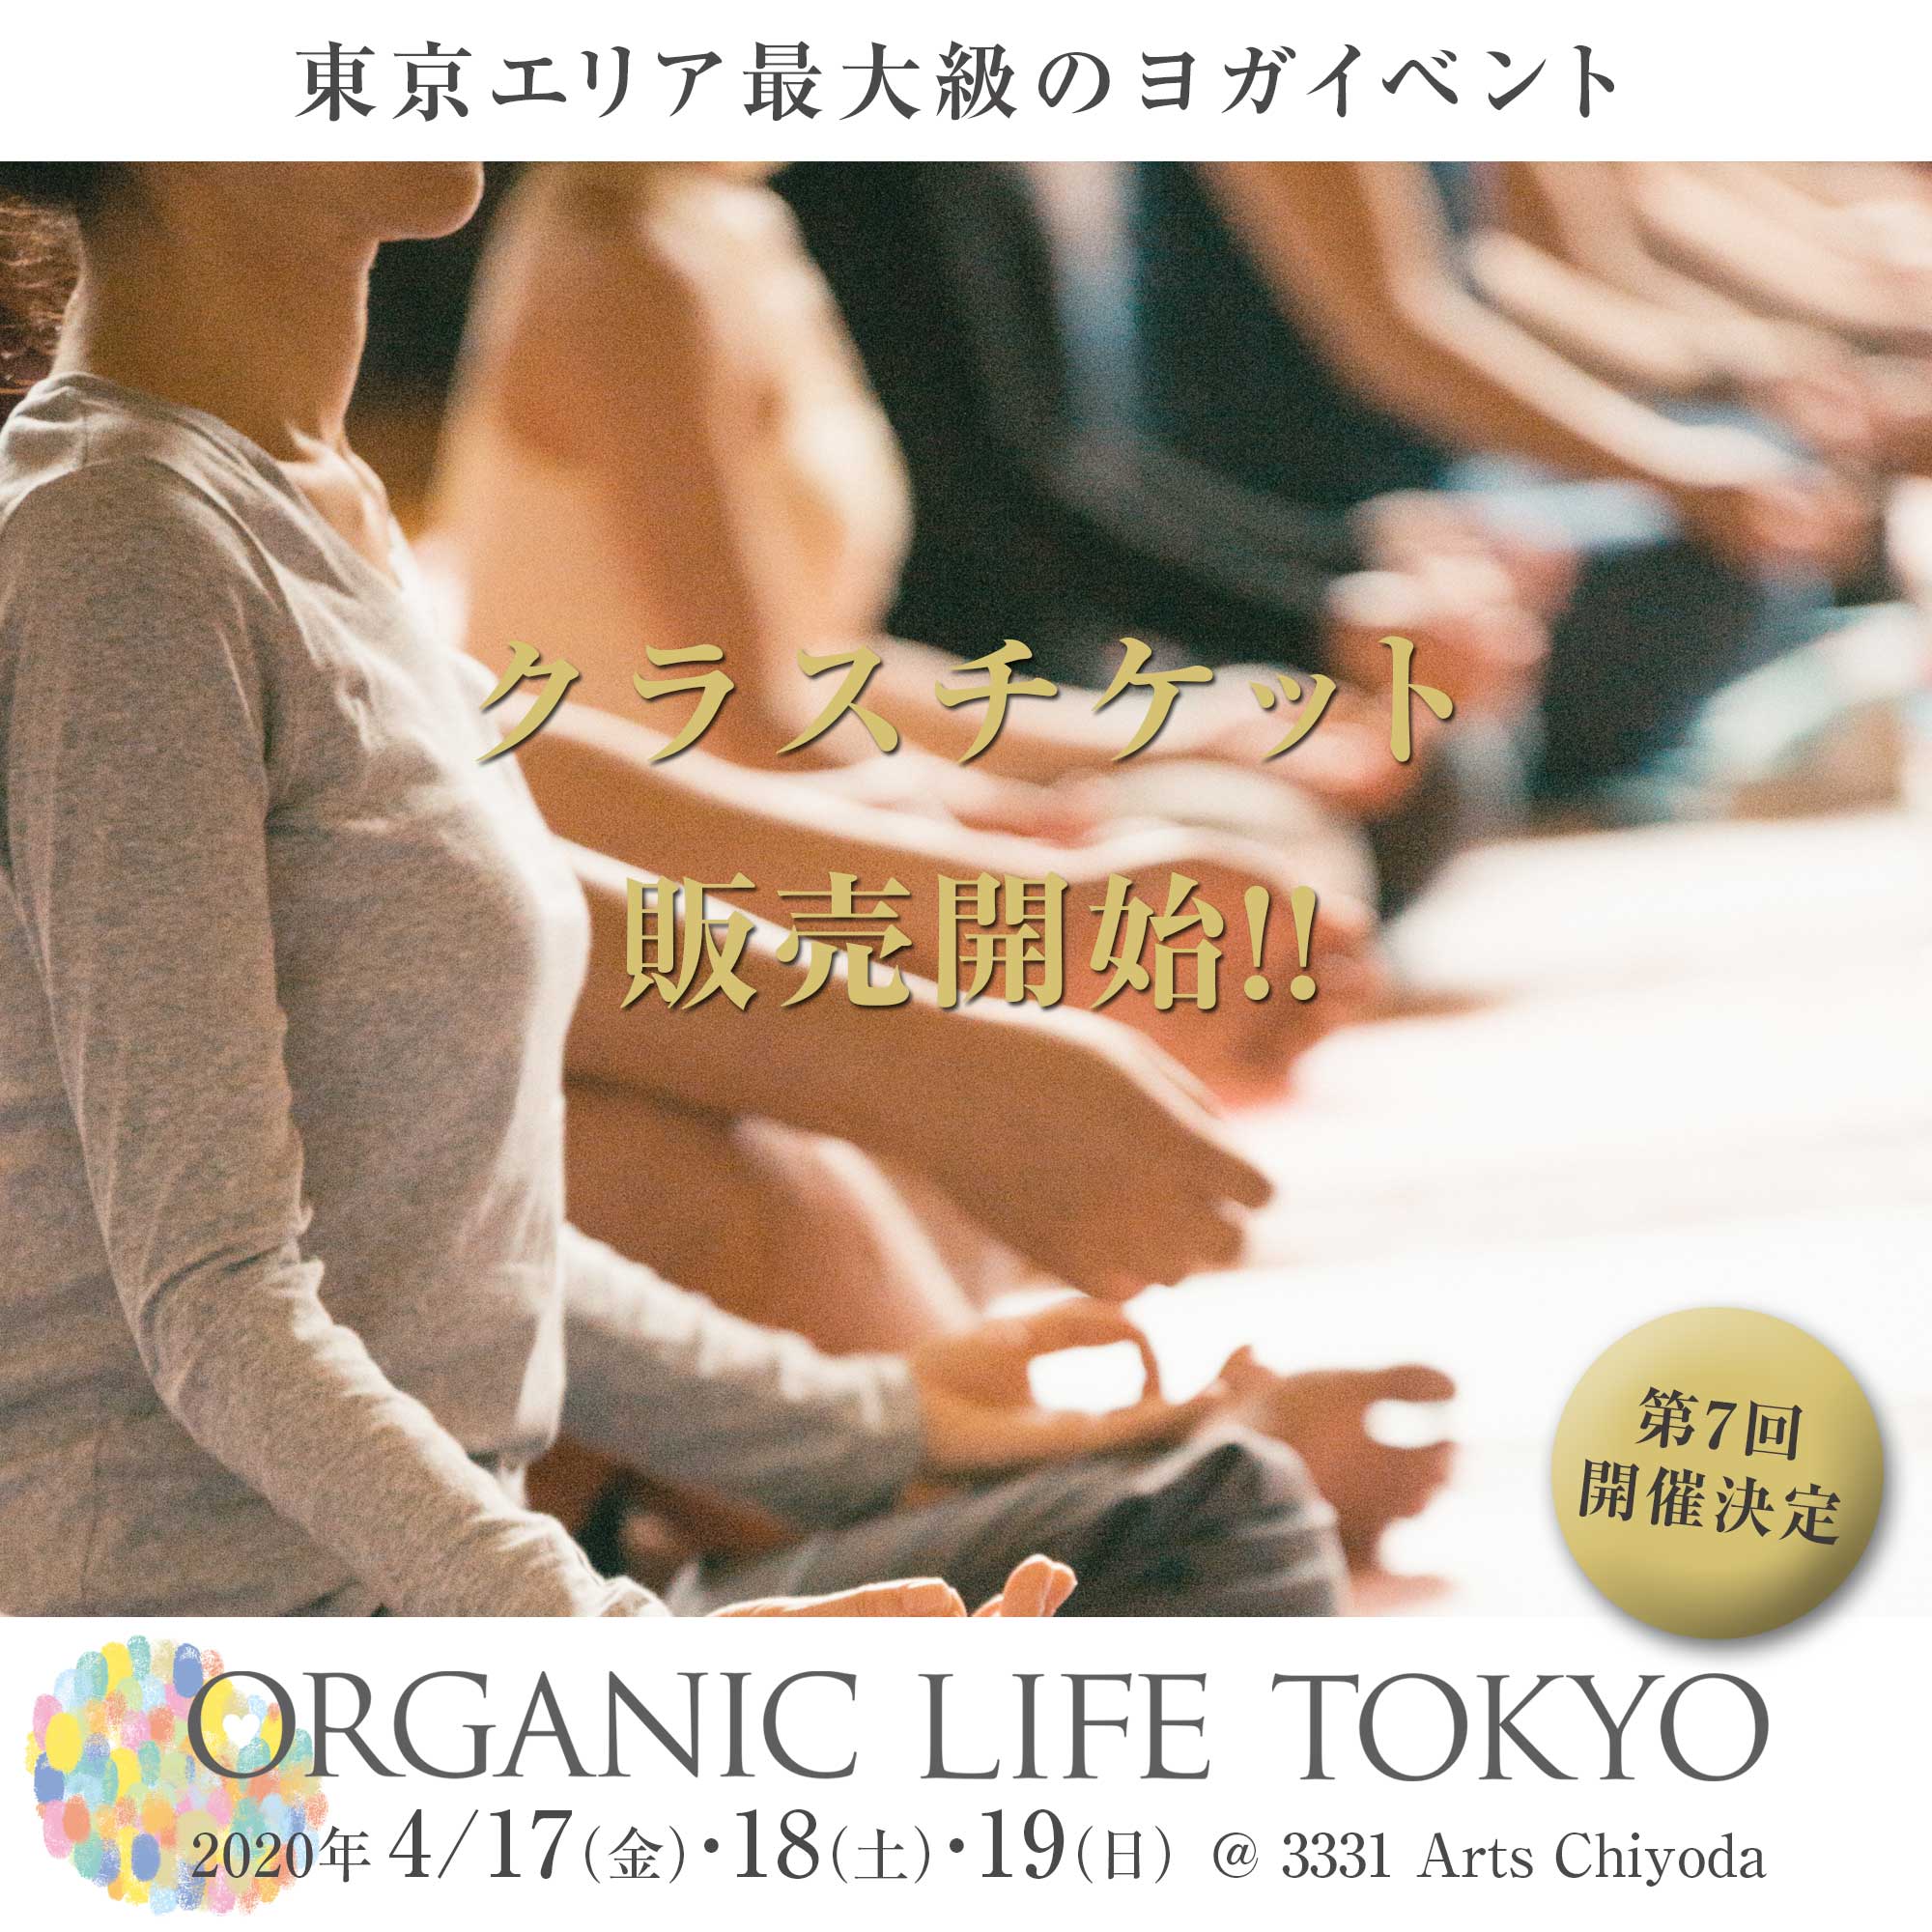 ORGANIC LIFE TOKYO 出演決定